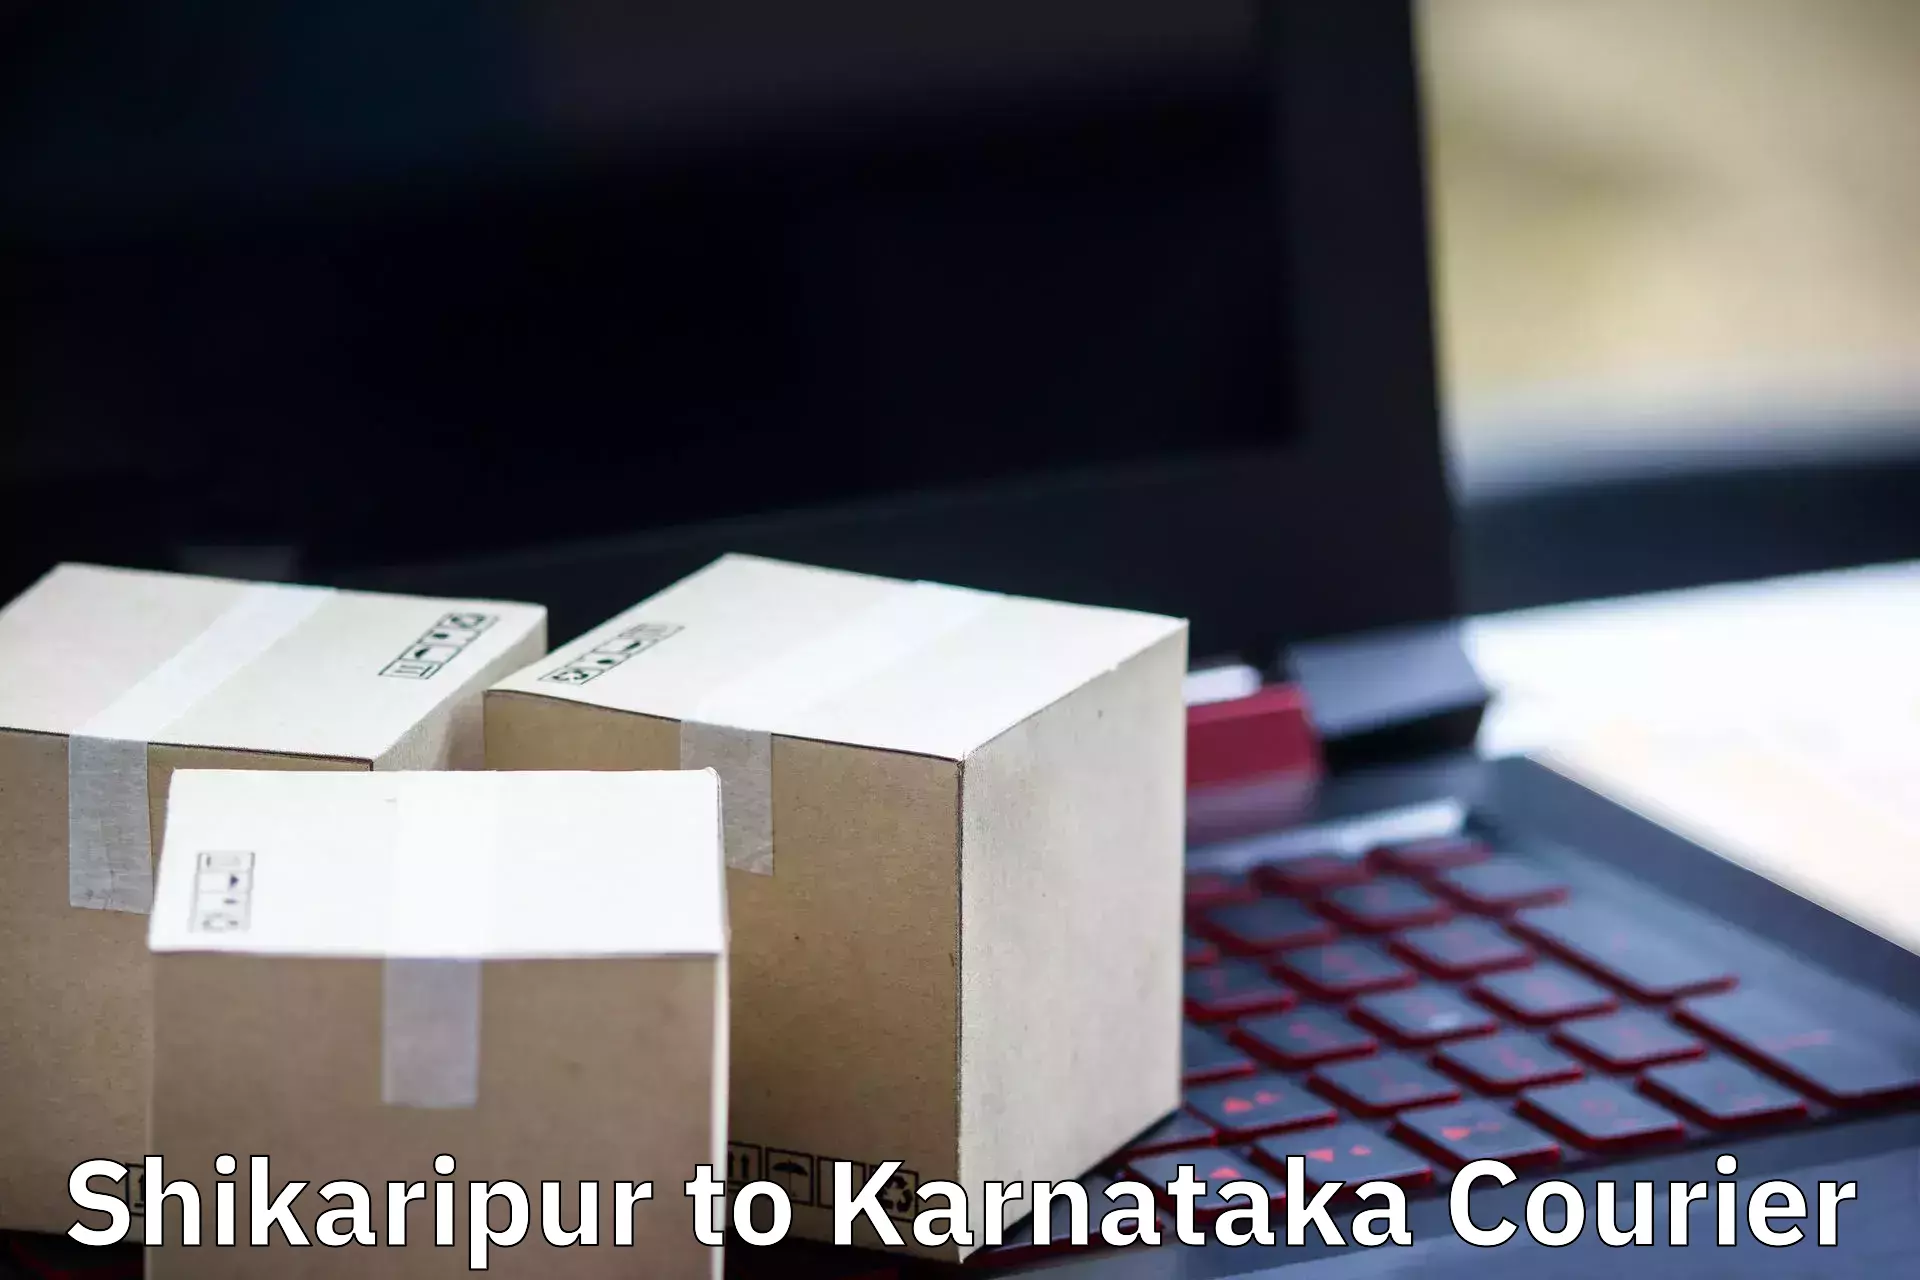 Professional moving company Shikaripur to Bangalore